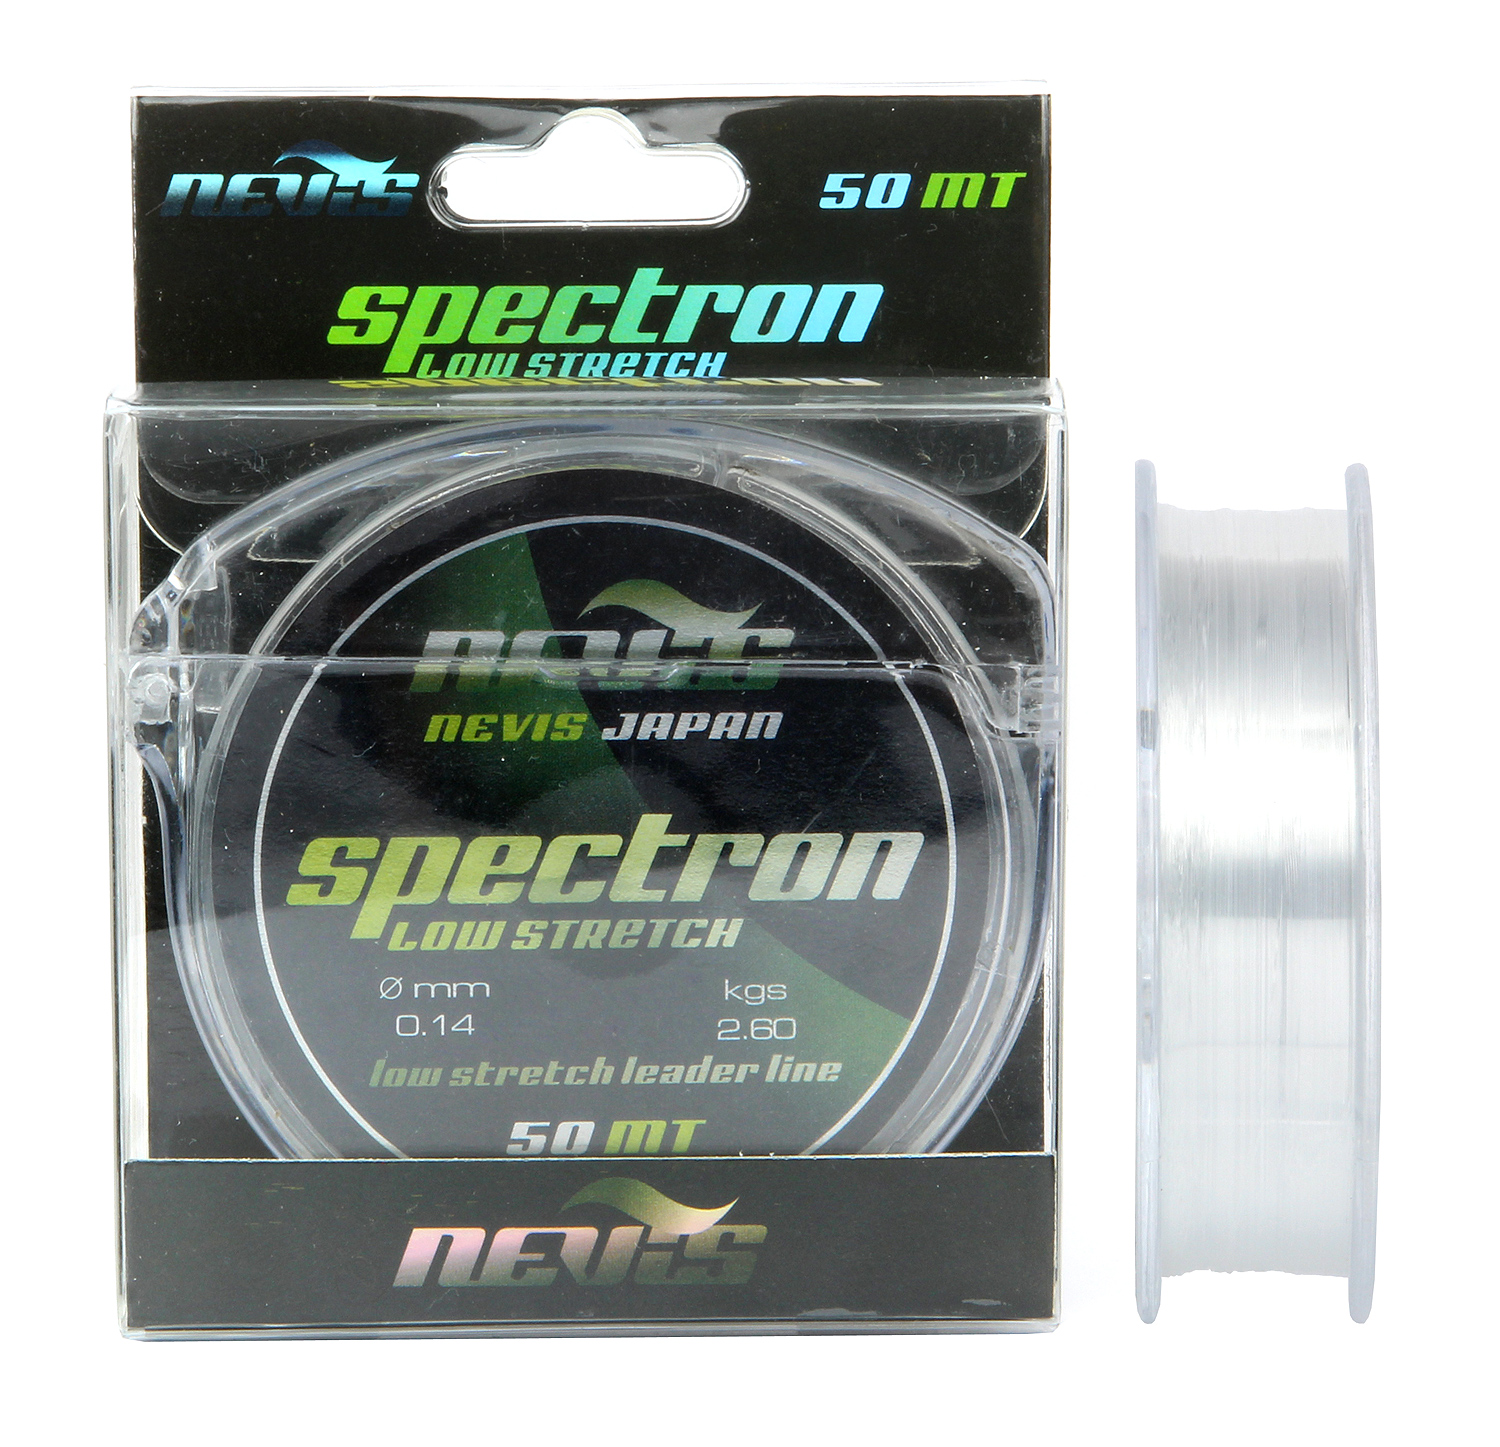 Spectron 50m/0.20mm